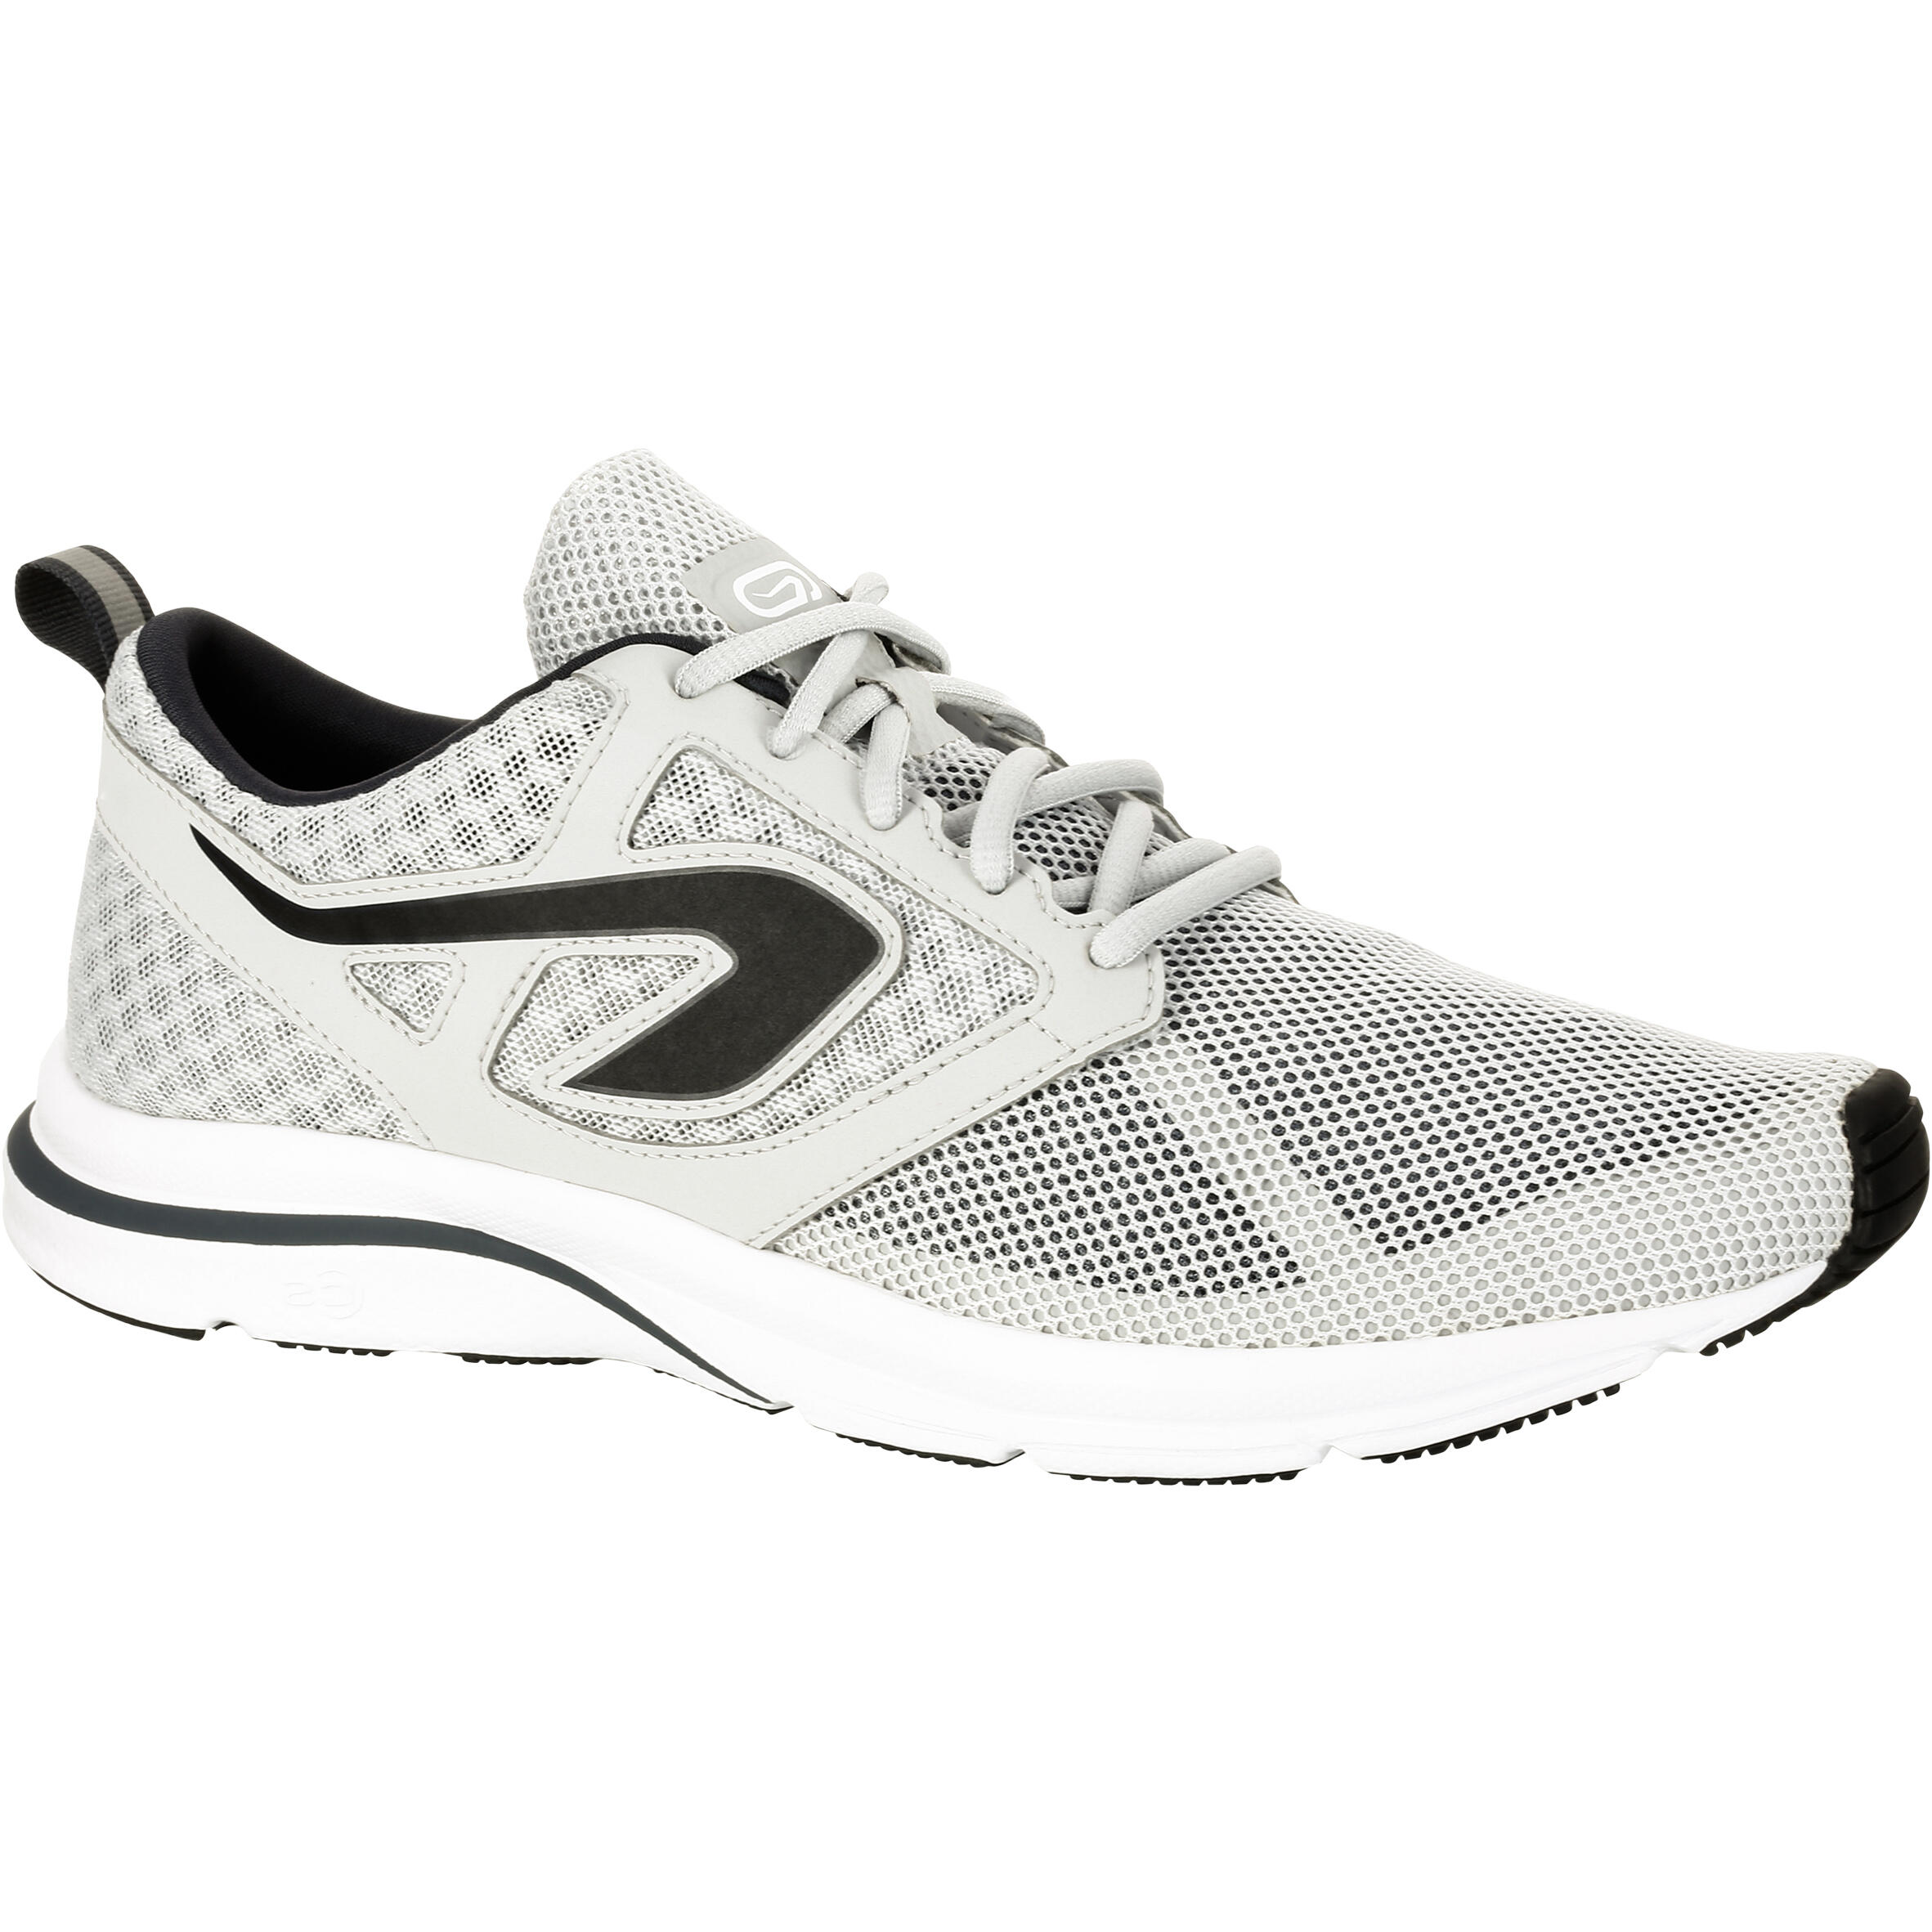 decathlon running shoes online